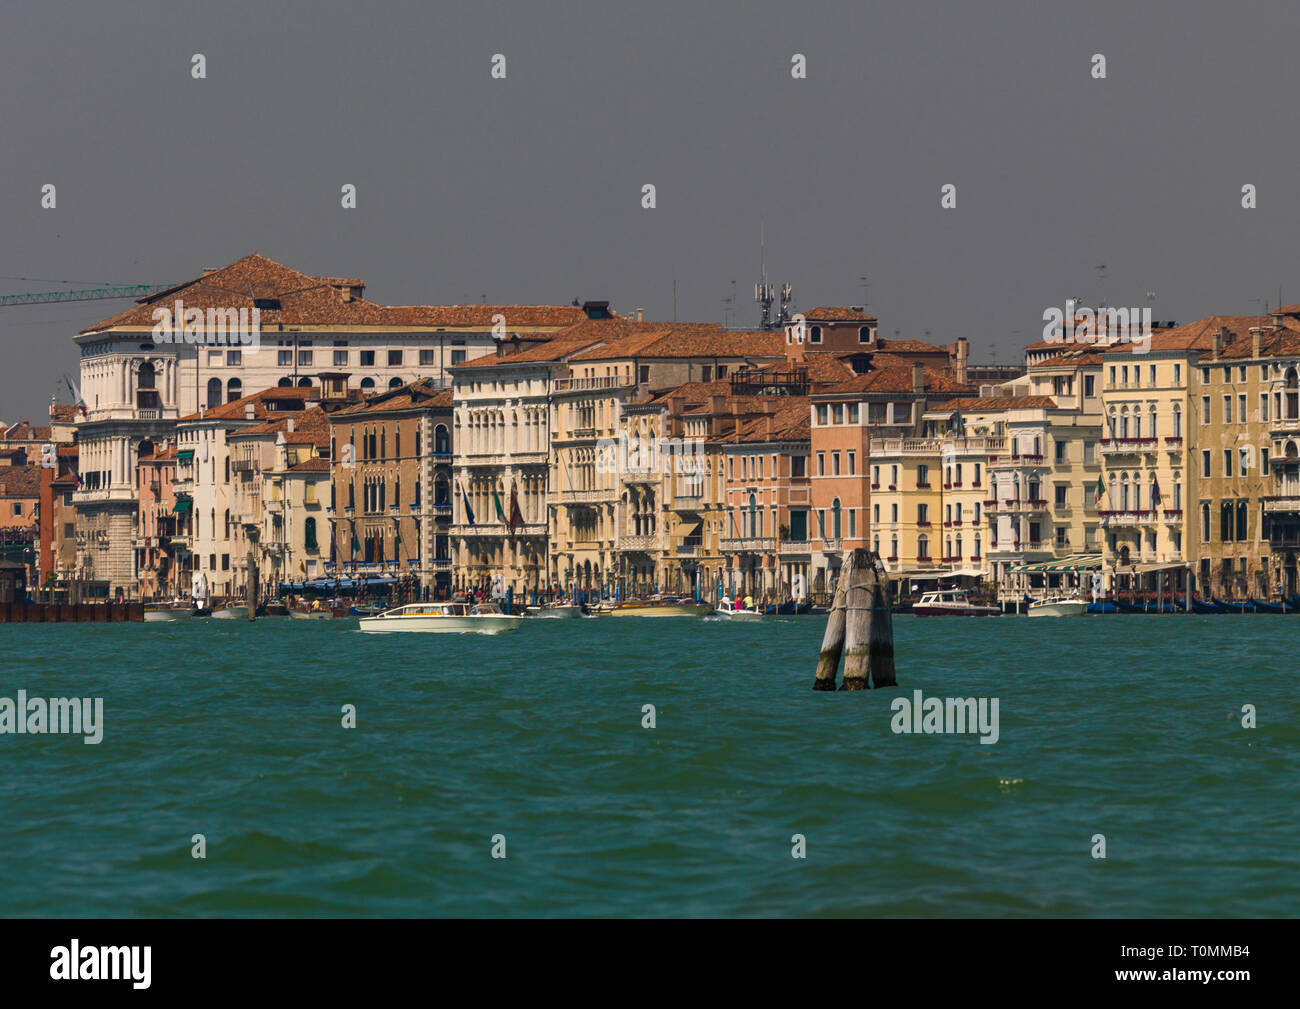 Old buildings on the grand canal, Veneto Region, Venice, Italy Stock Photo